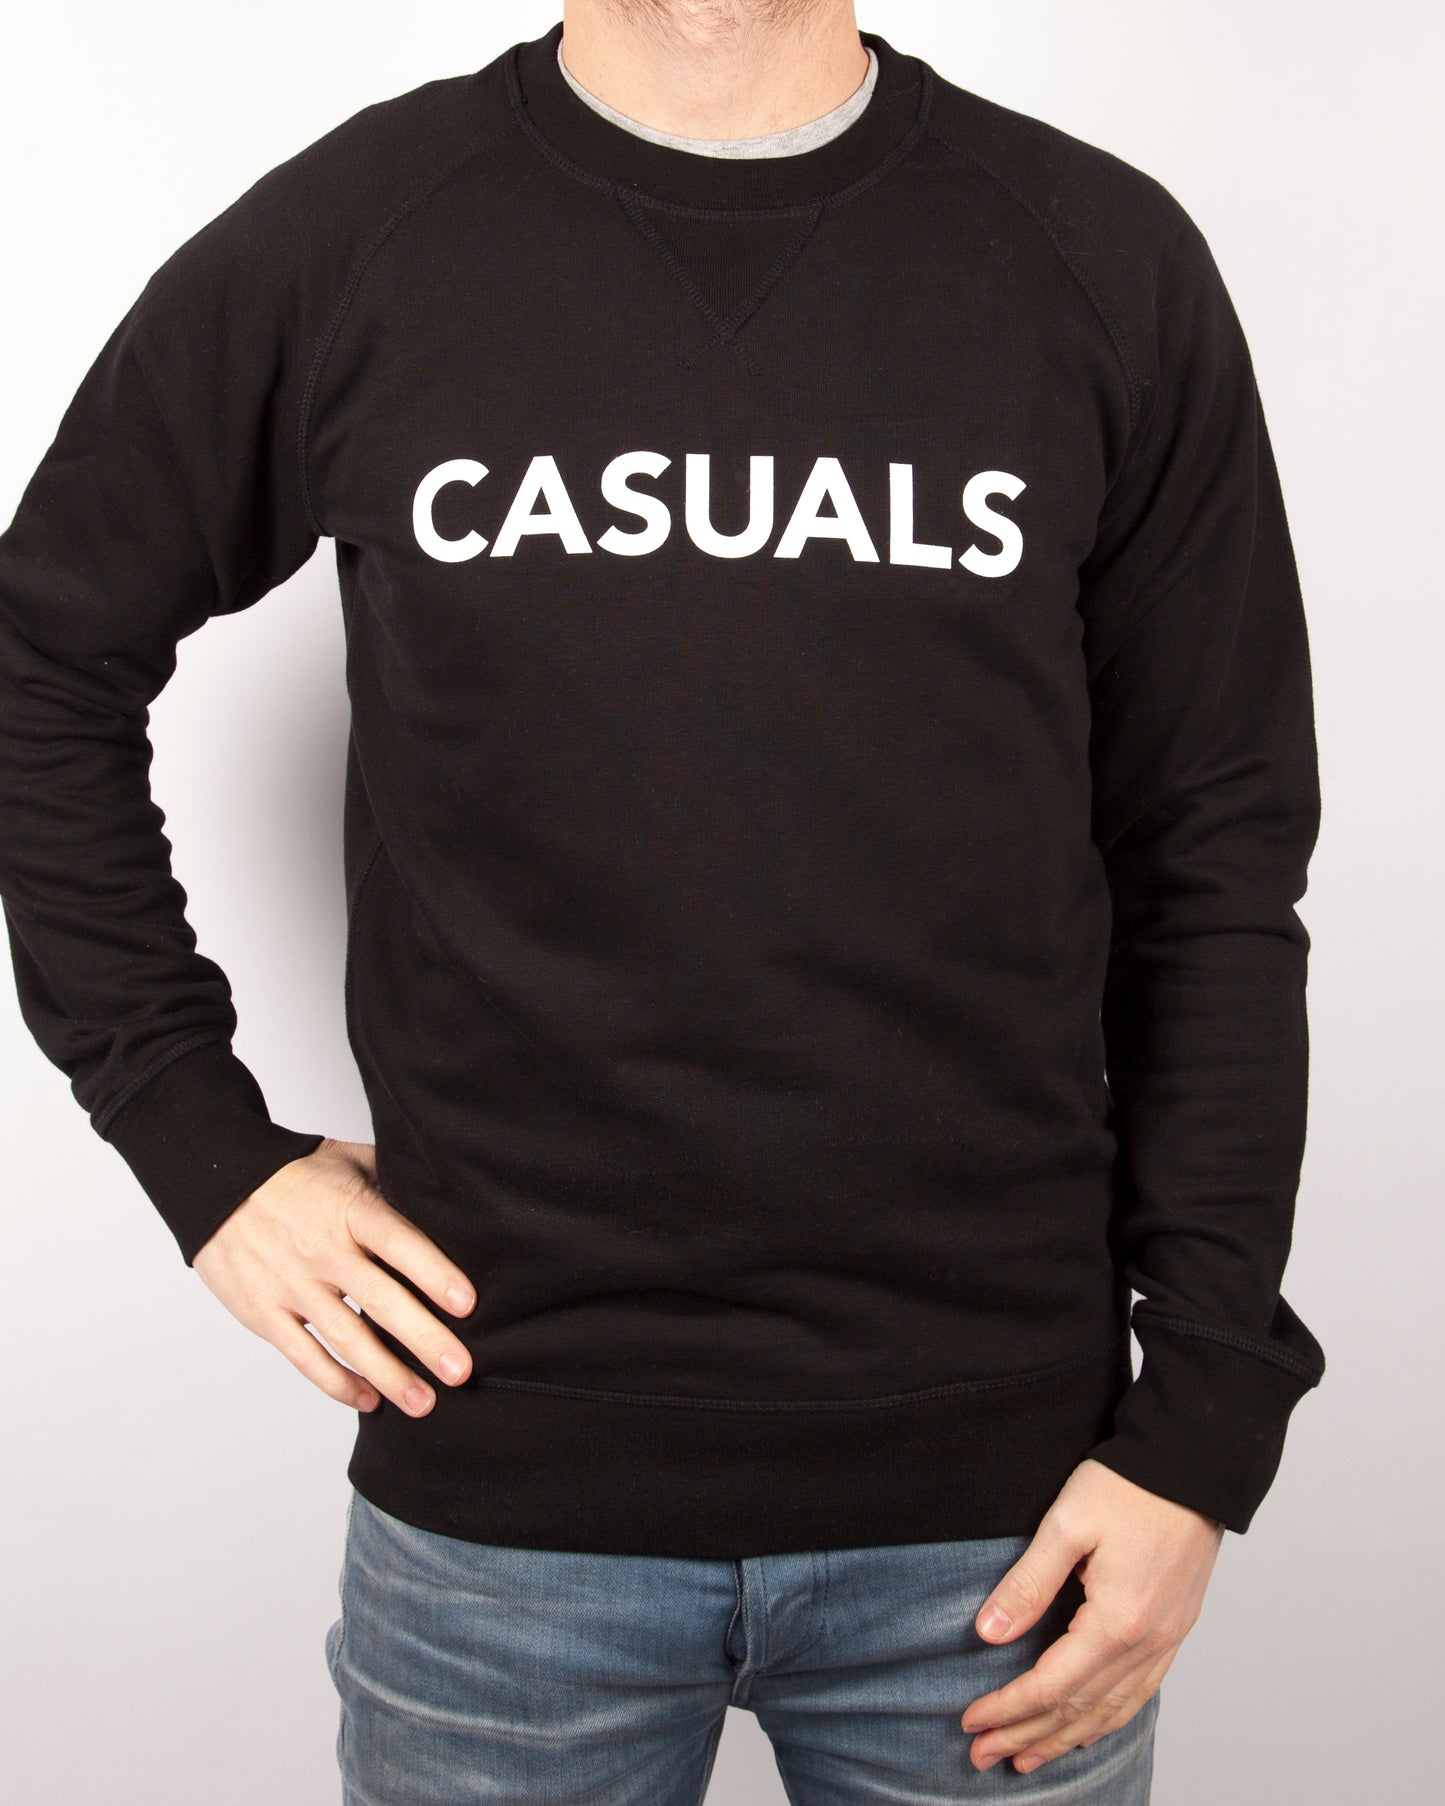 CASUALS (Black)